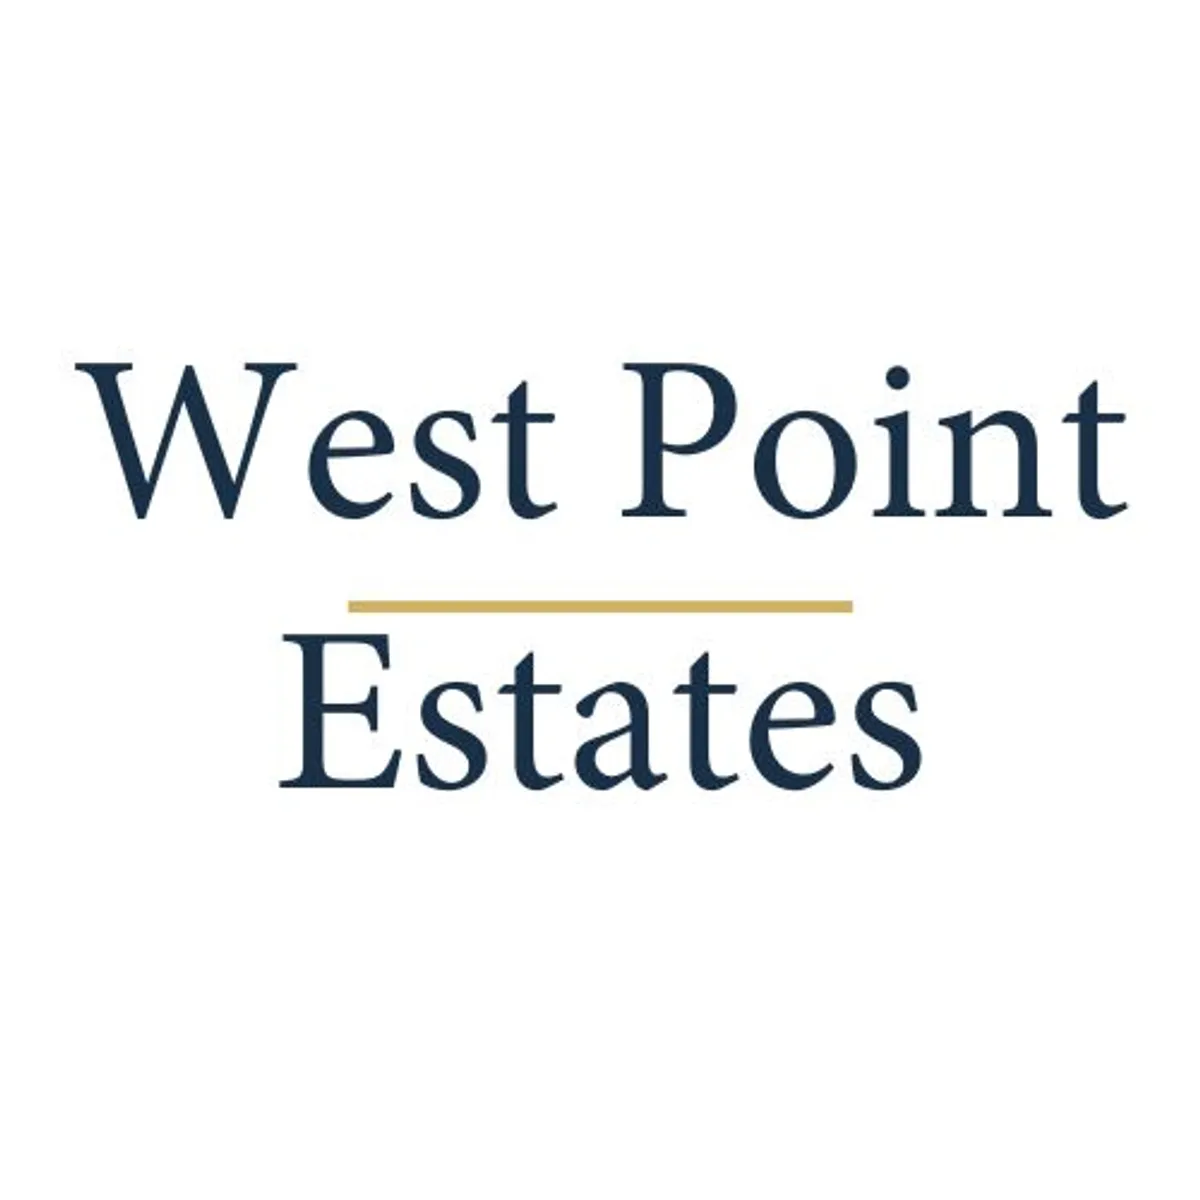 West Point Estates